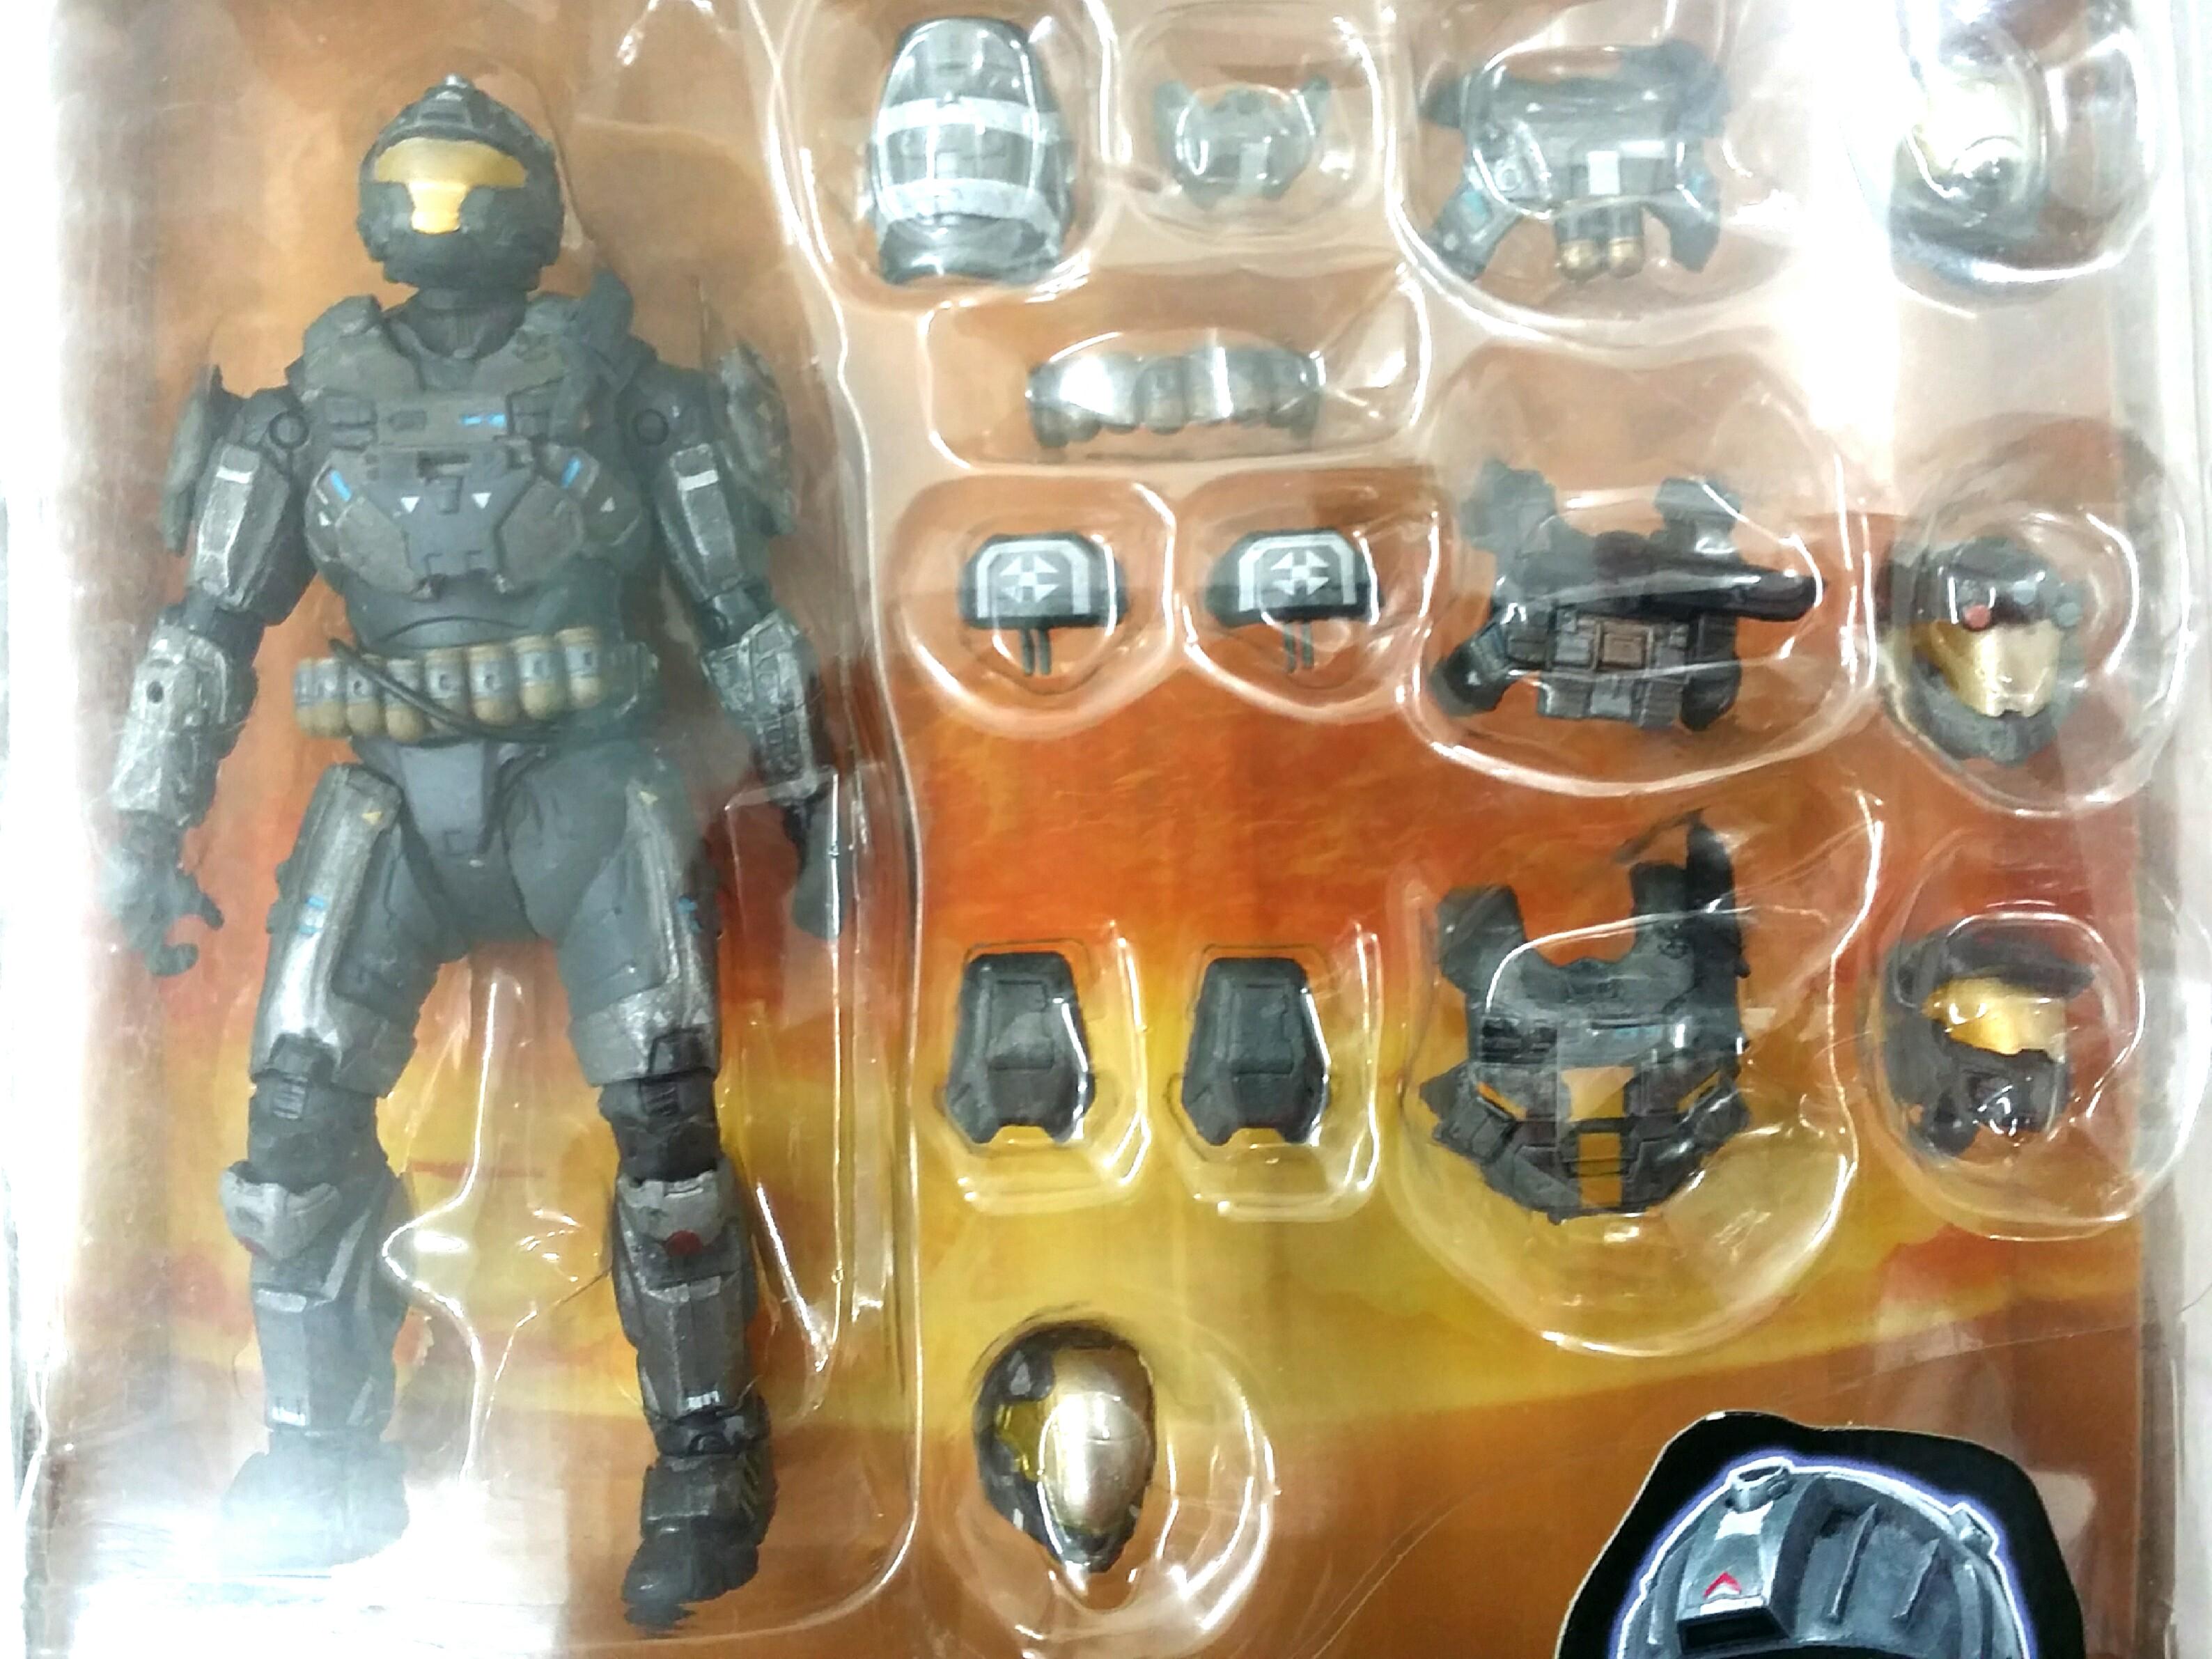 McFarlane Halo Reach Series 3 Spartan Operator Action Figure (Steel) 